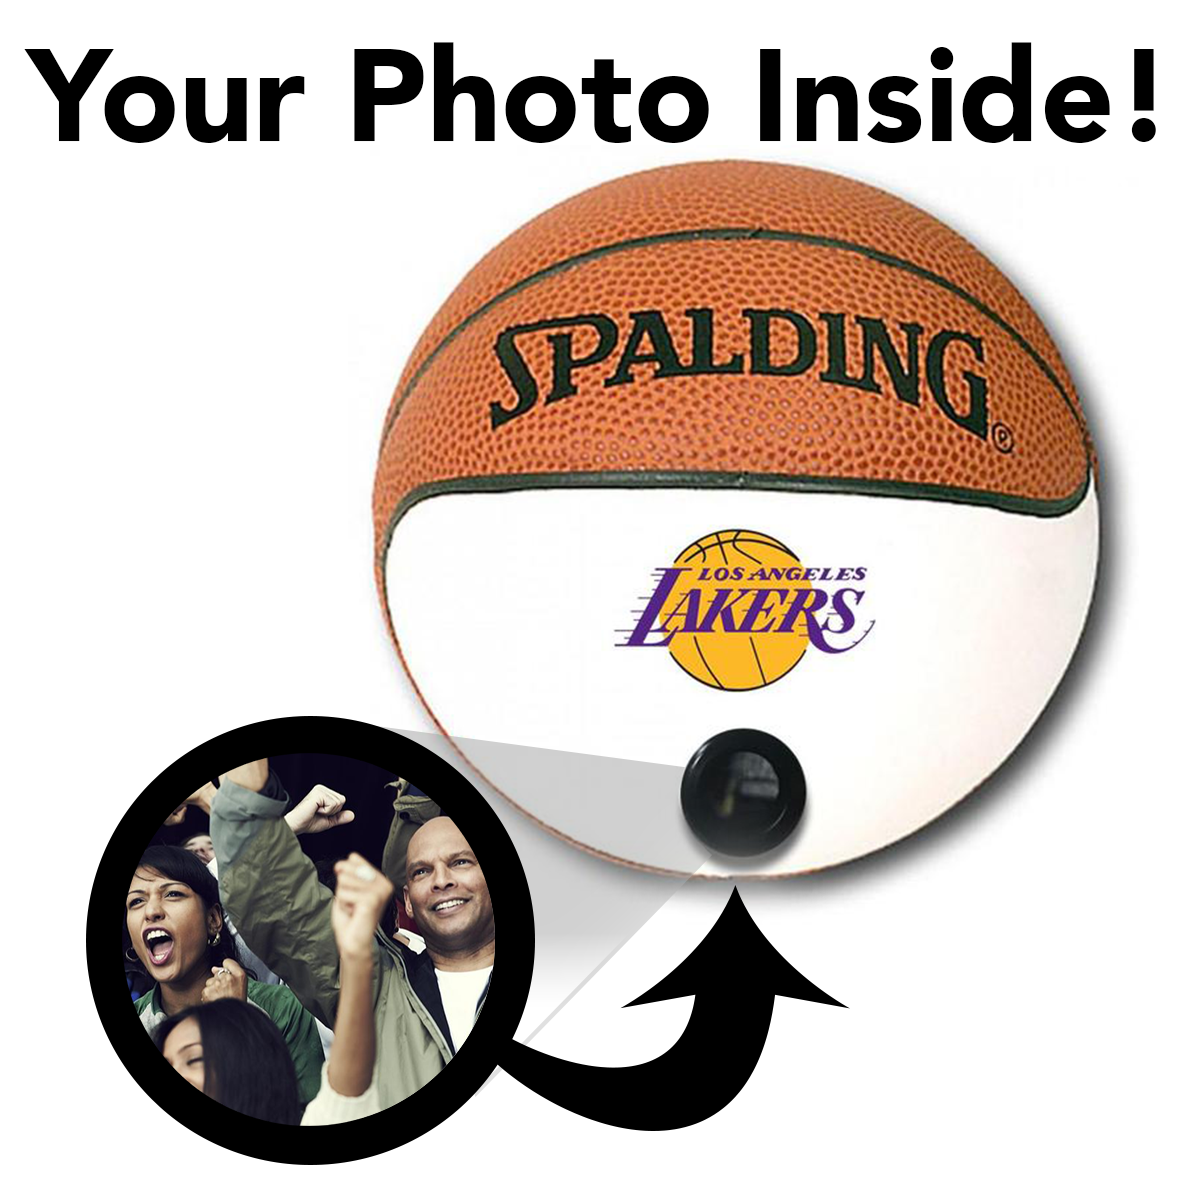 Lakers NBA Collectible Miniature Basketball - Picture Inside - FANZ Collectibles - Fanz Collectibles